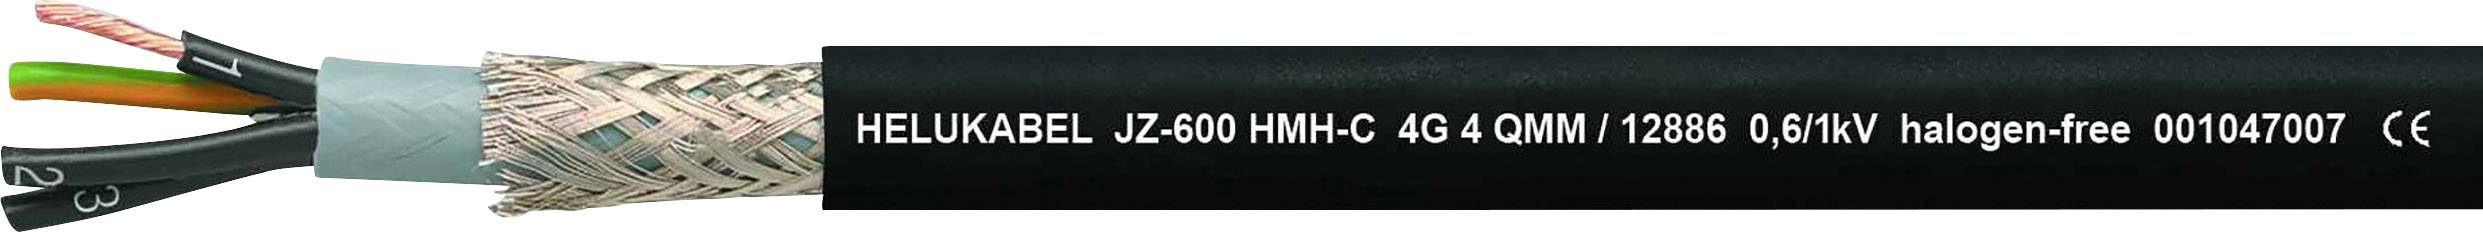 HELUKABEL JZ-600 HMH-C Steuerleitung 5 G 1.50 mm² Schwarz 12873-1000 1000 m